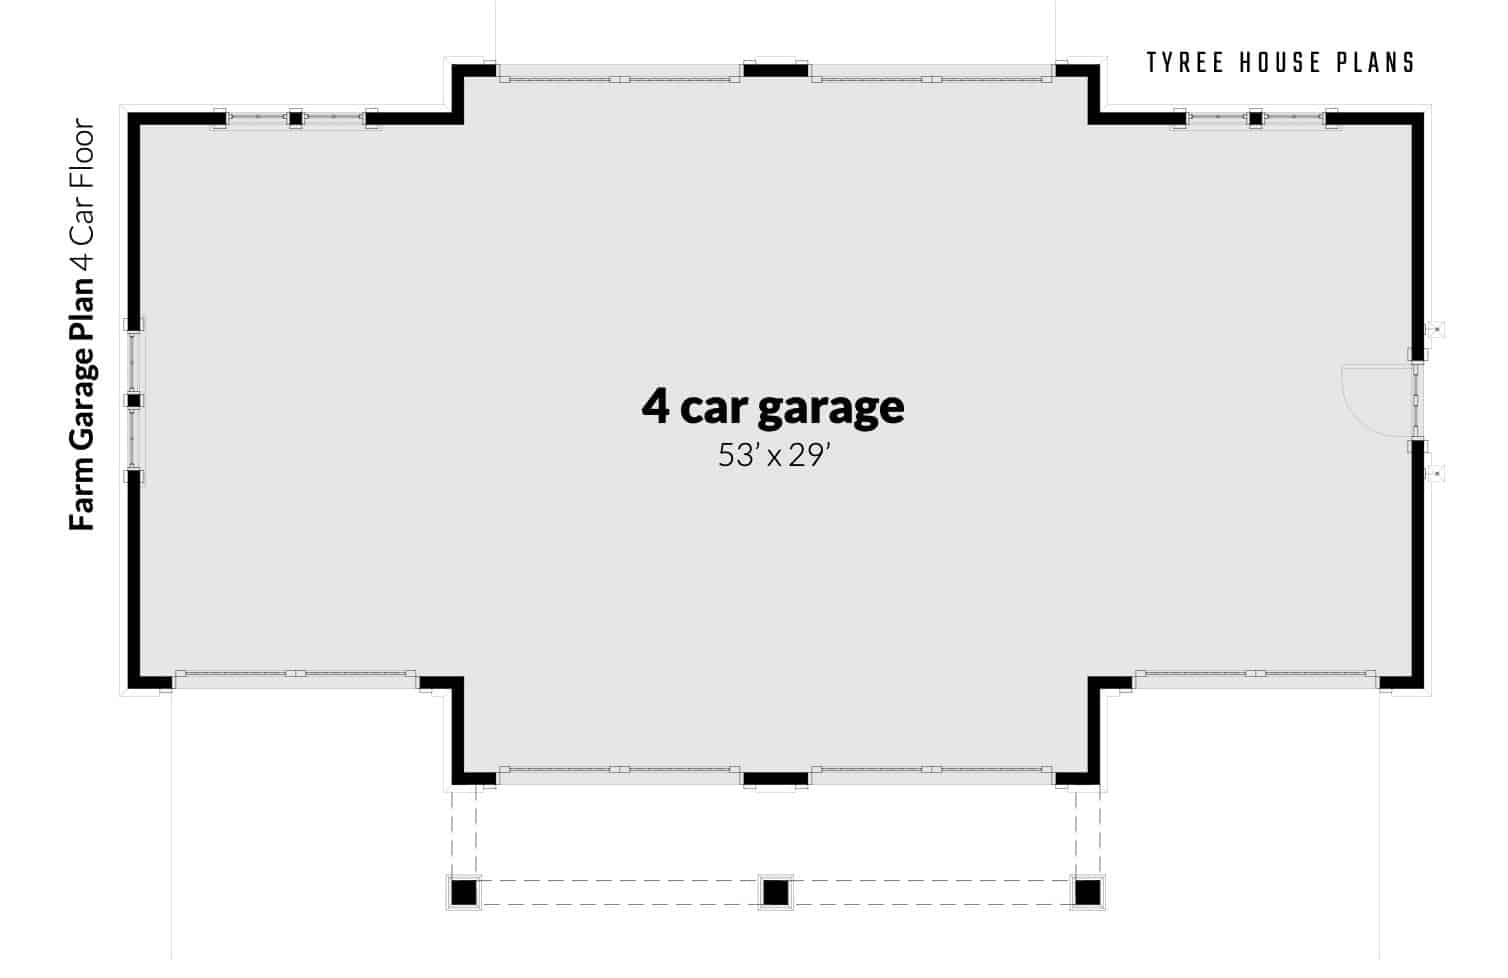 Floor Plan - Farm Garage Plan - 4 Car by Tyree House Plans